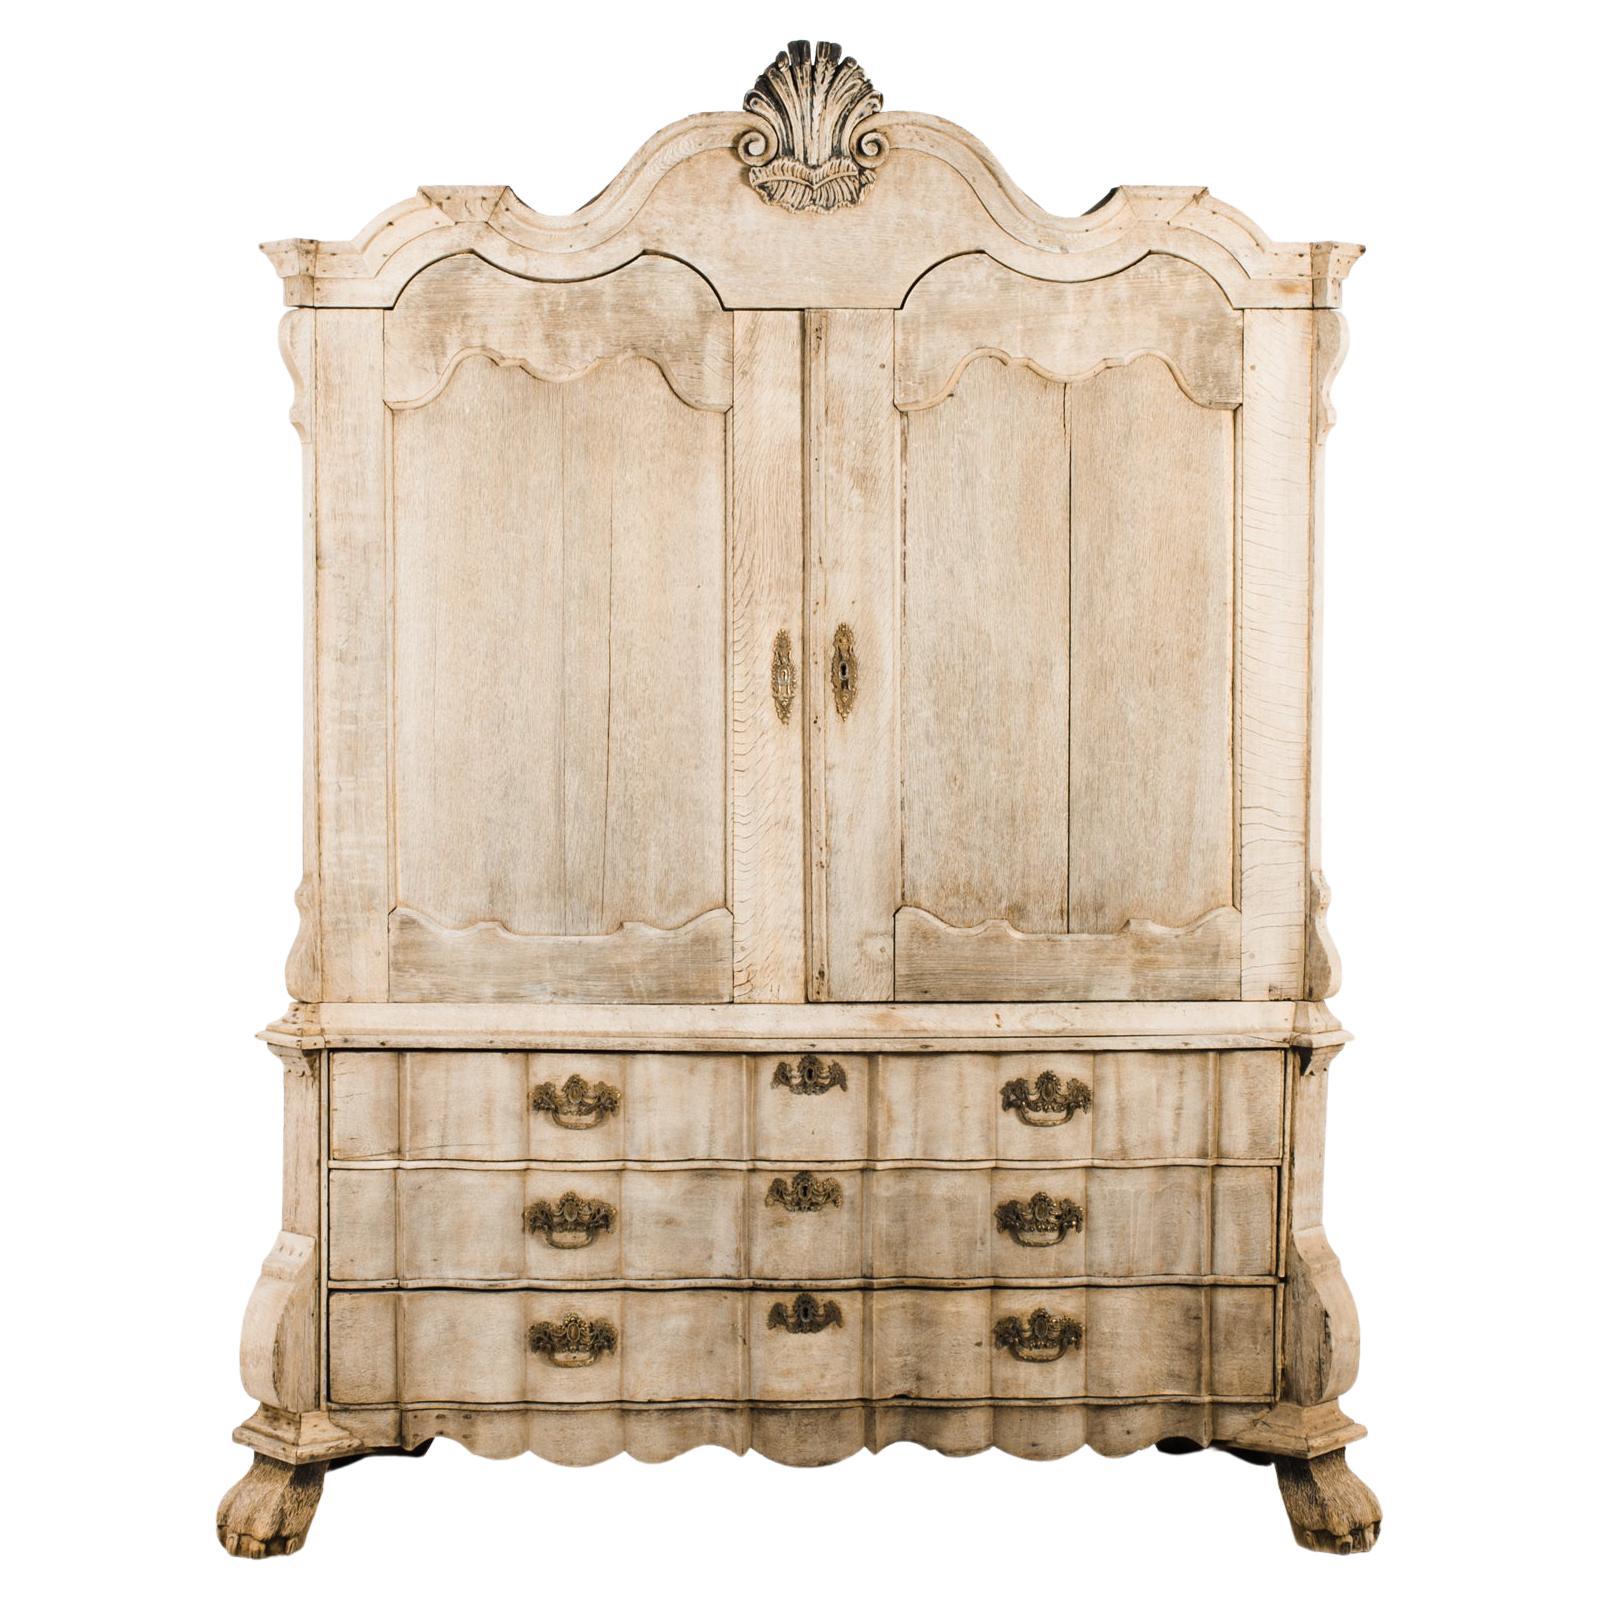 1780s Dutch Bleached Oak Dresser